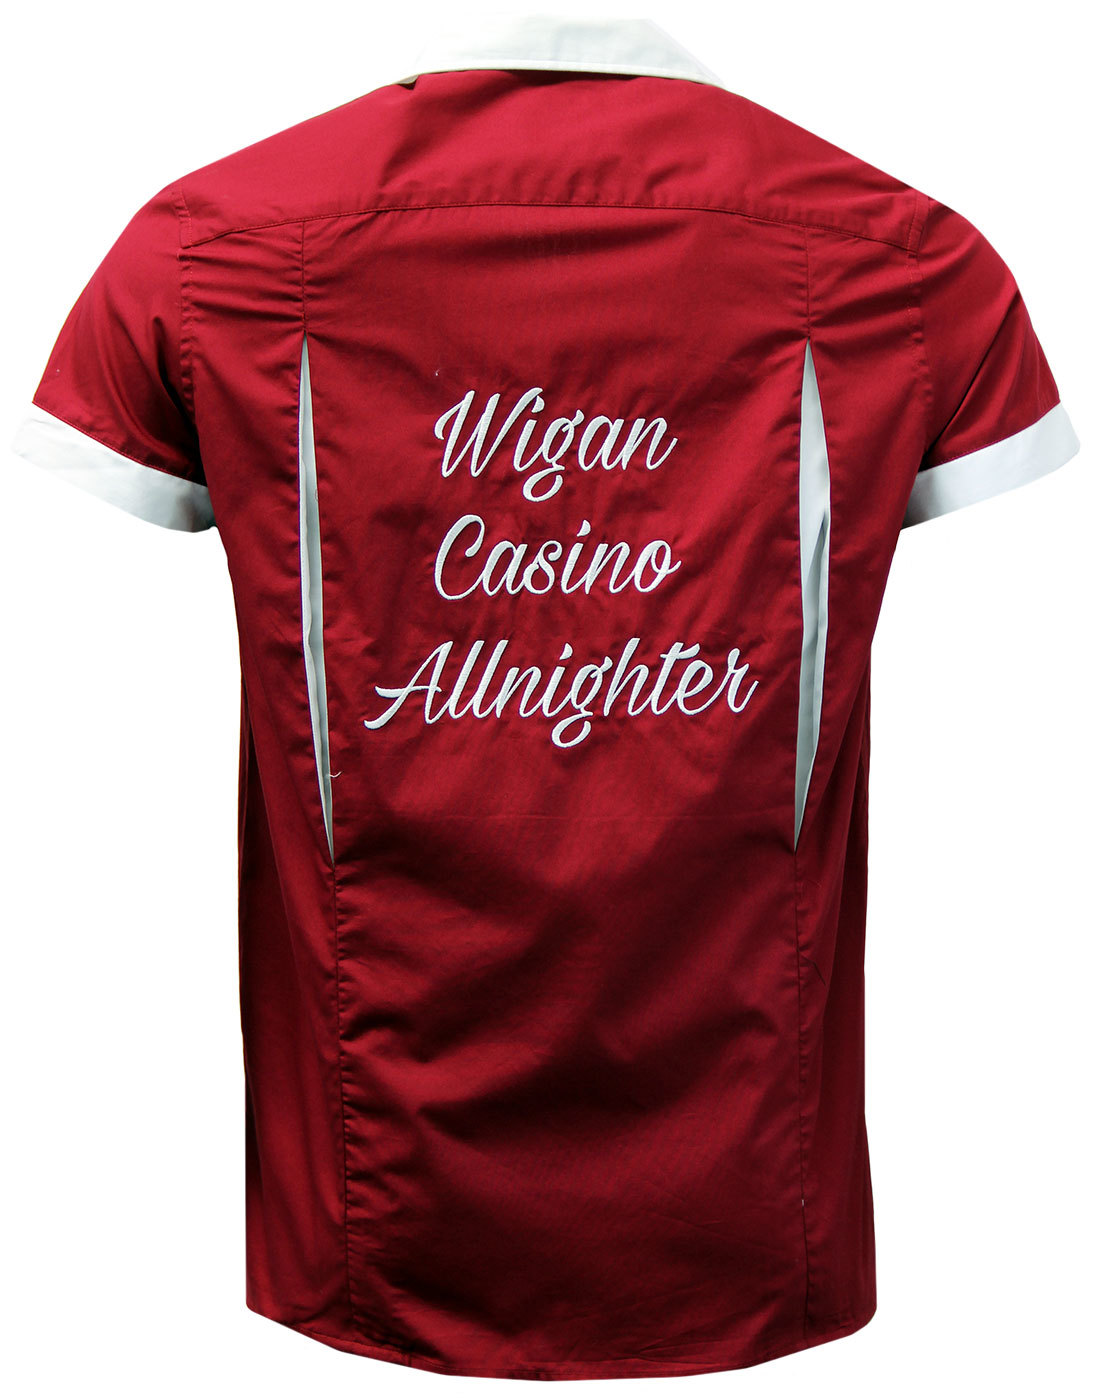 casino type bowling shirts